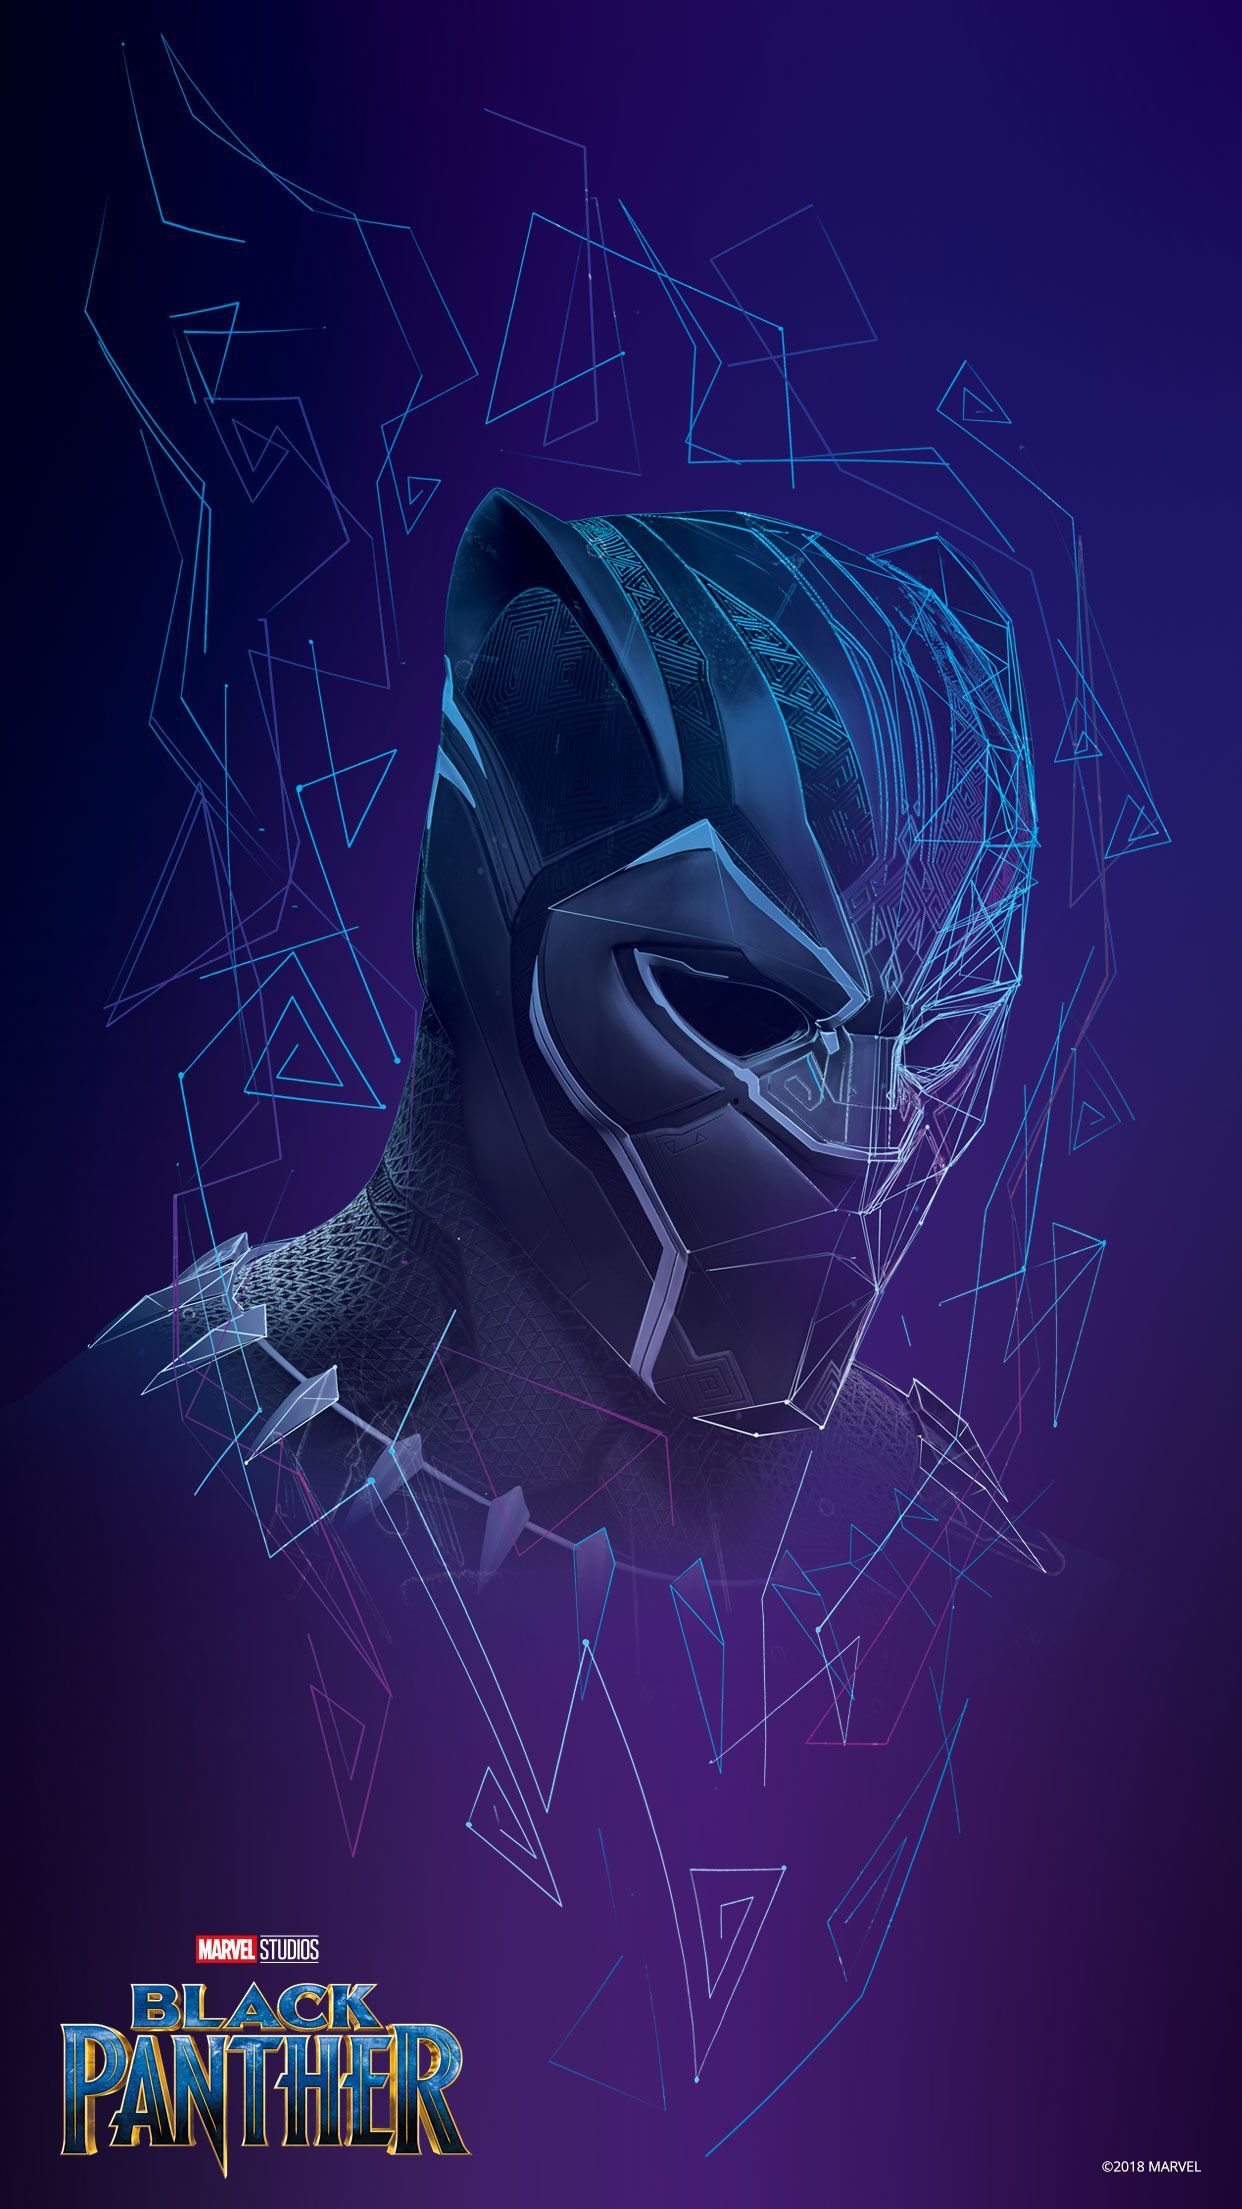 Black Panther Image 'black Panther' Promotional Still